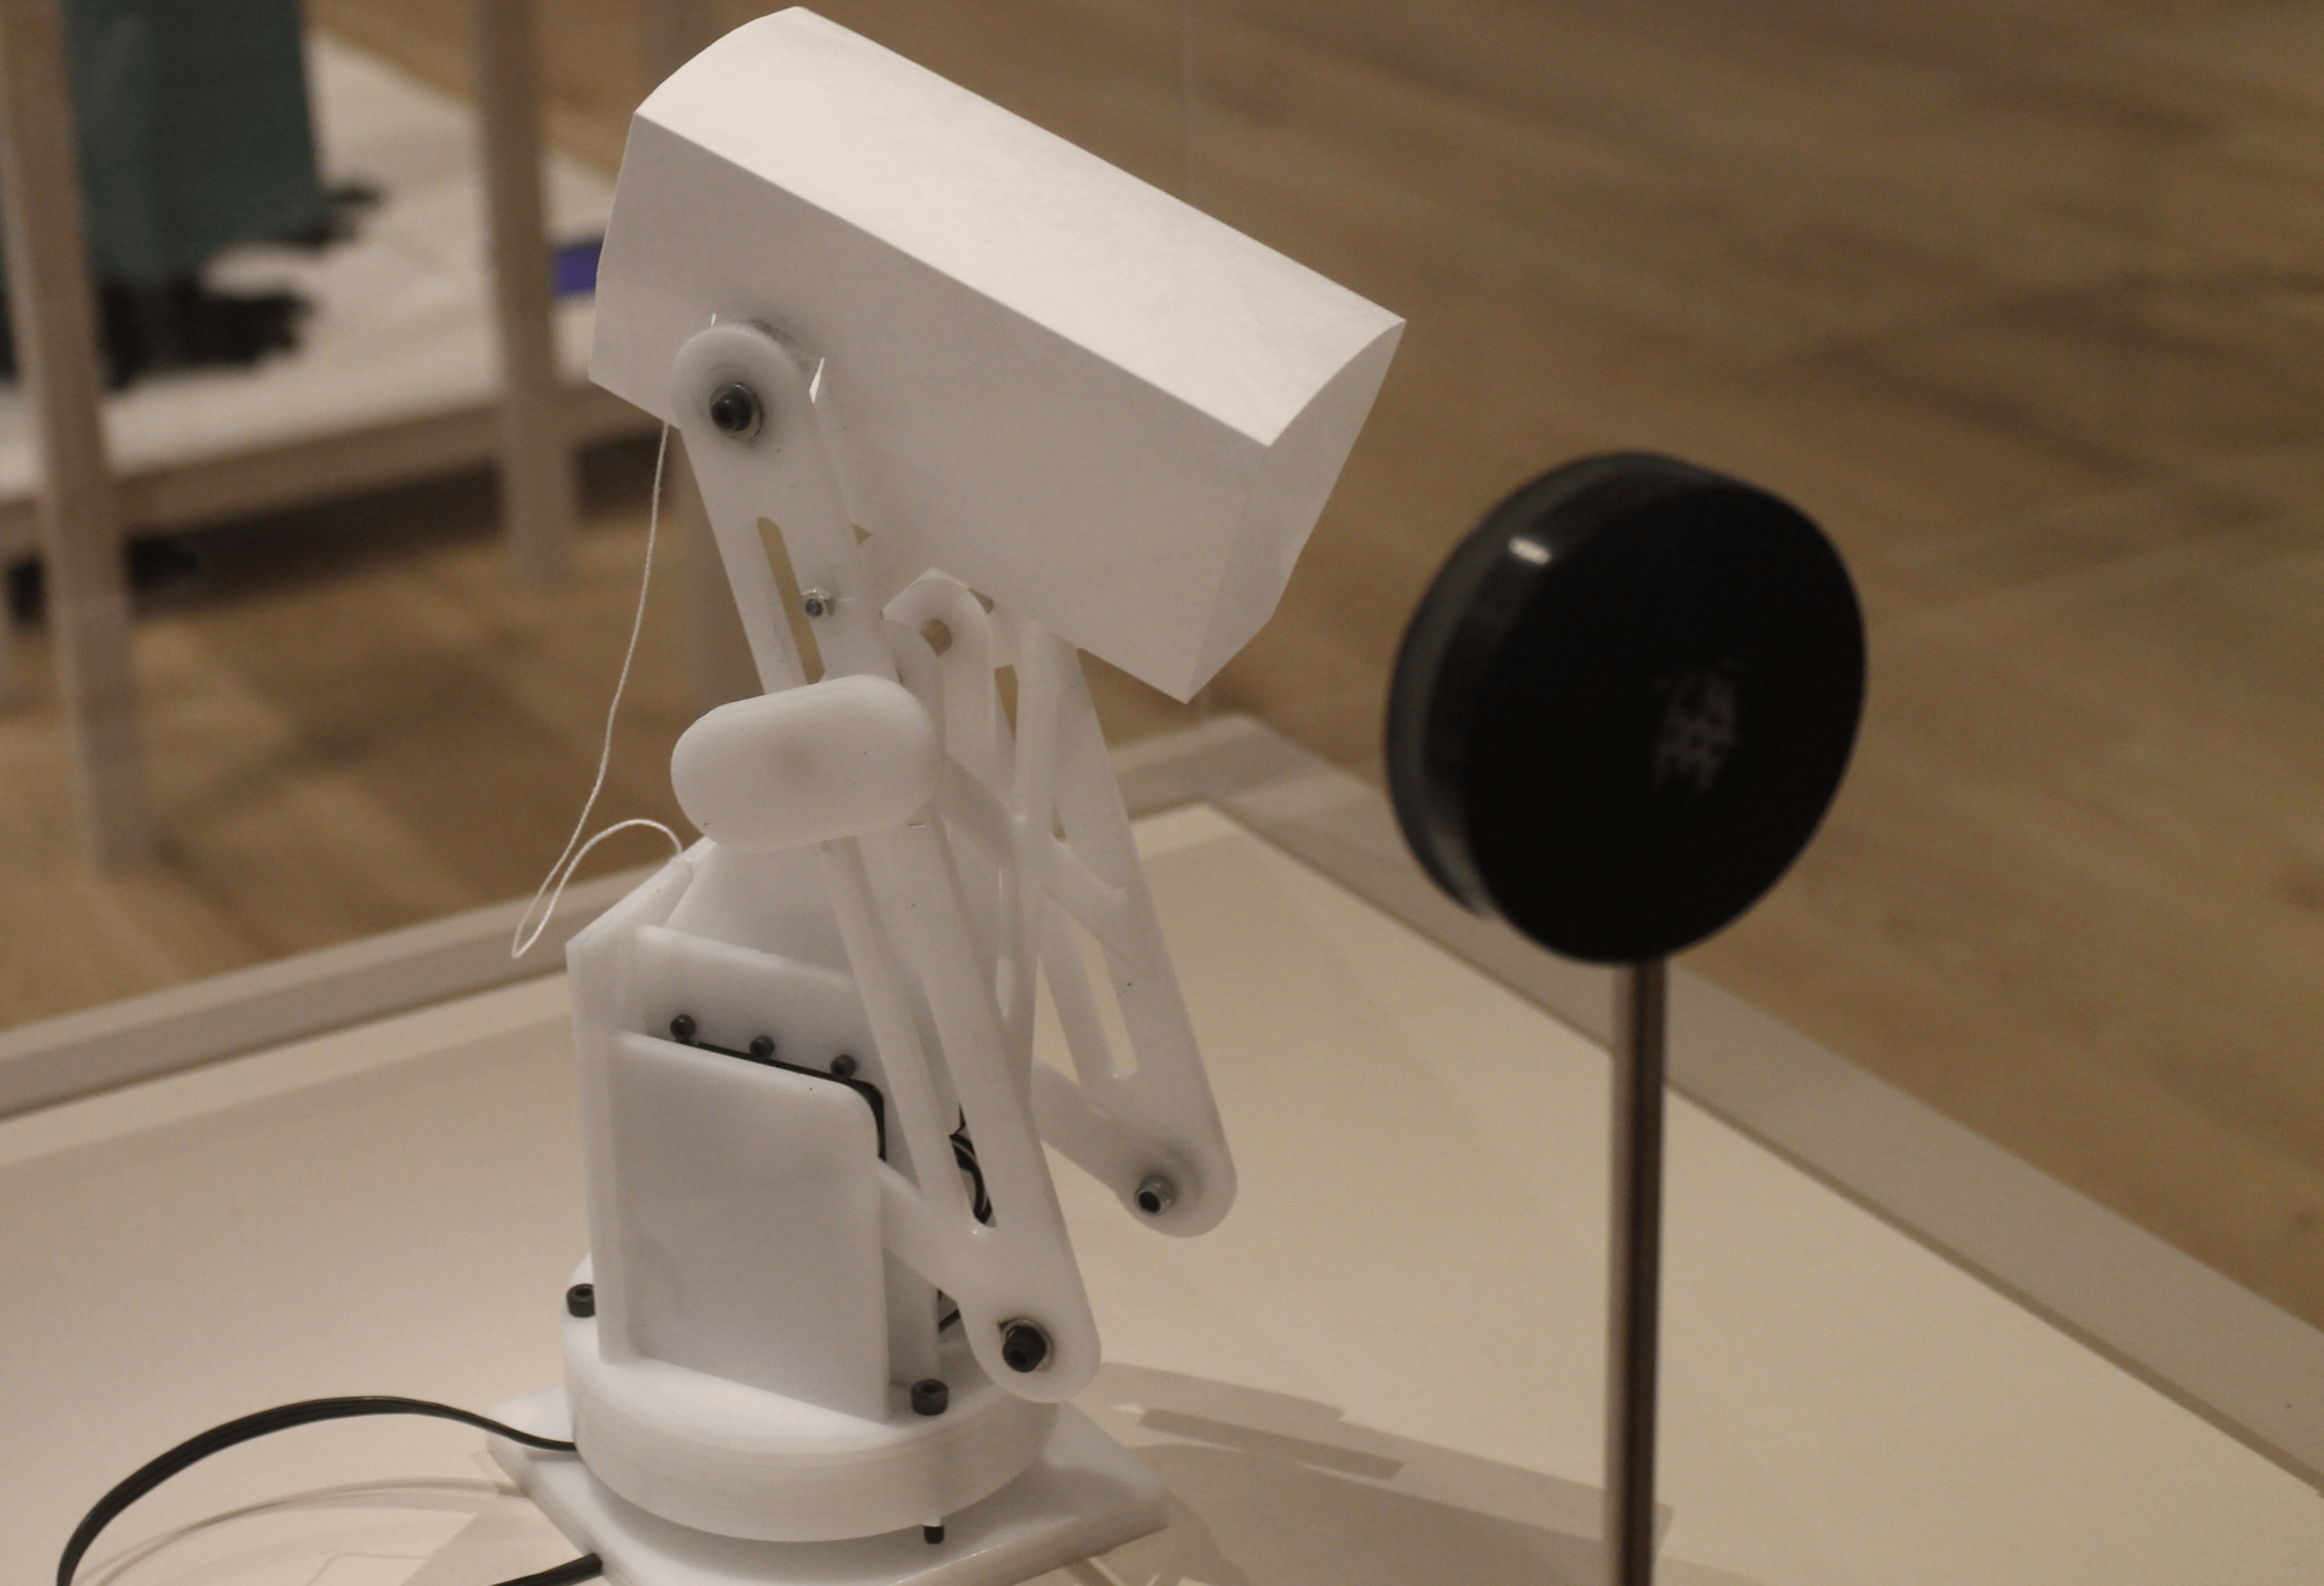 Kip, an Empathy Robotic Object by Guy Hoffman and Oren Zuckermann